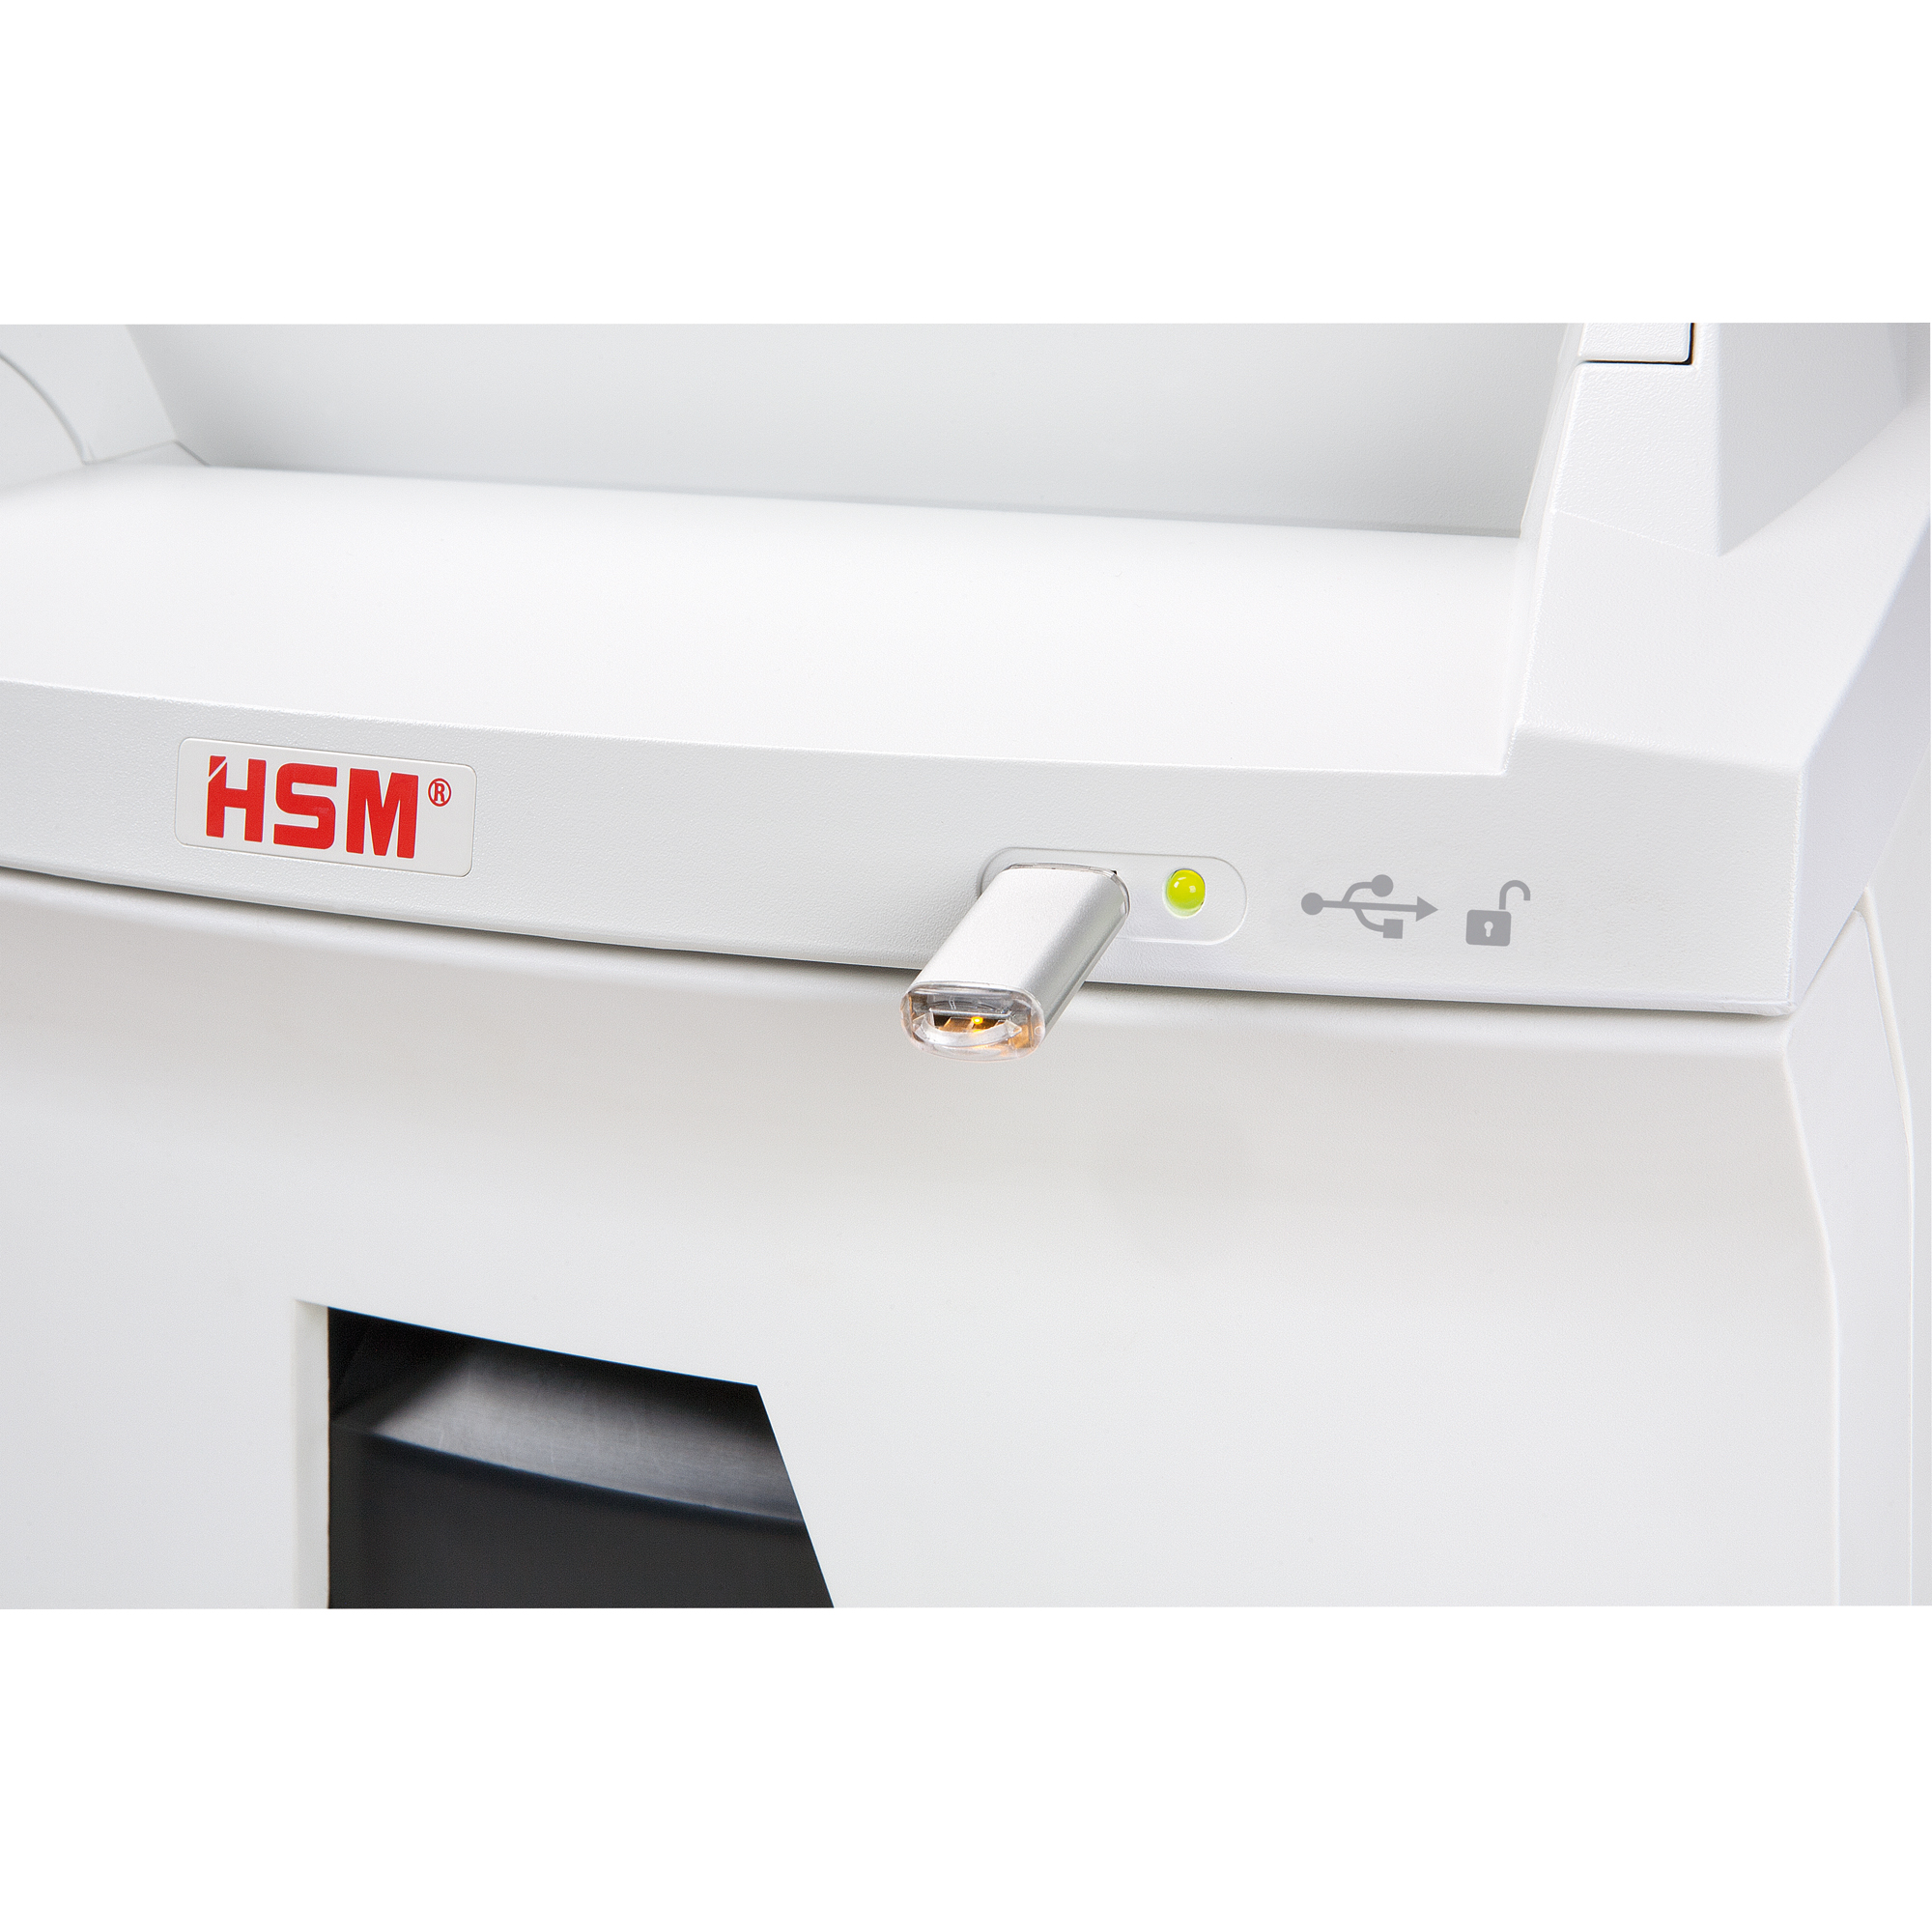 HSM® Aktenvernichter Autofeed SECURIO AF300 P-4